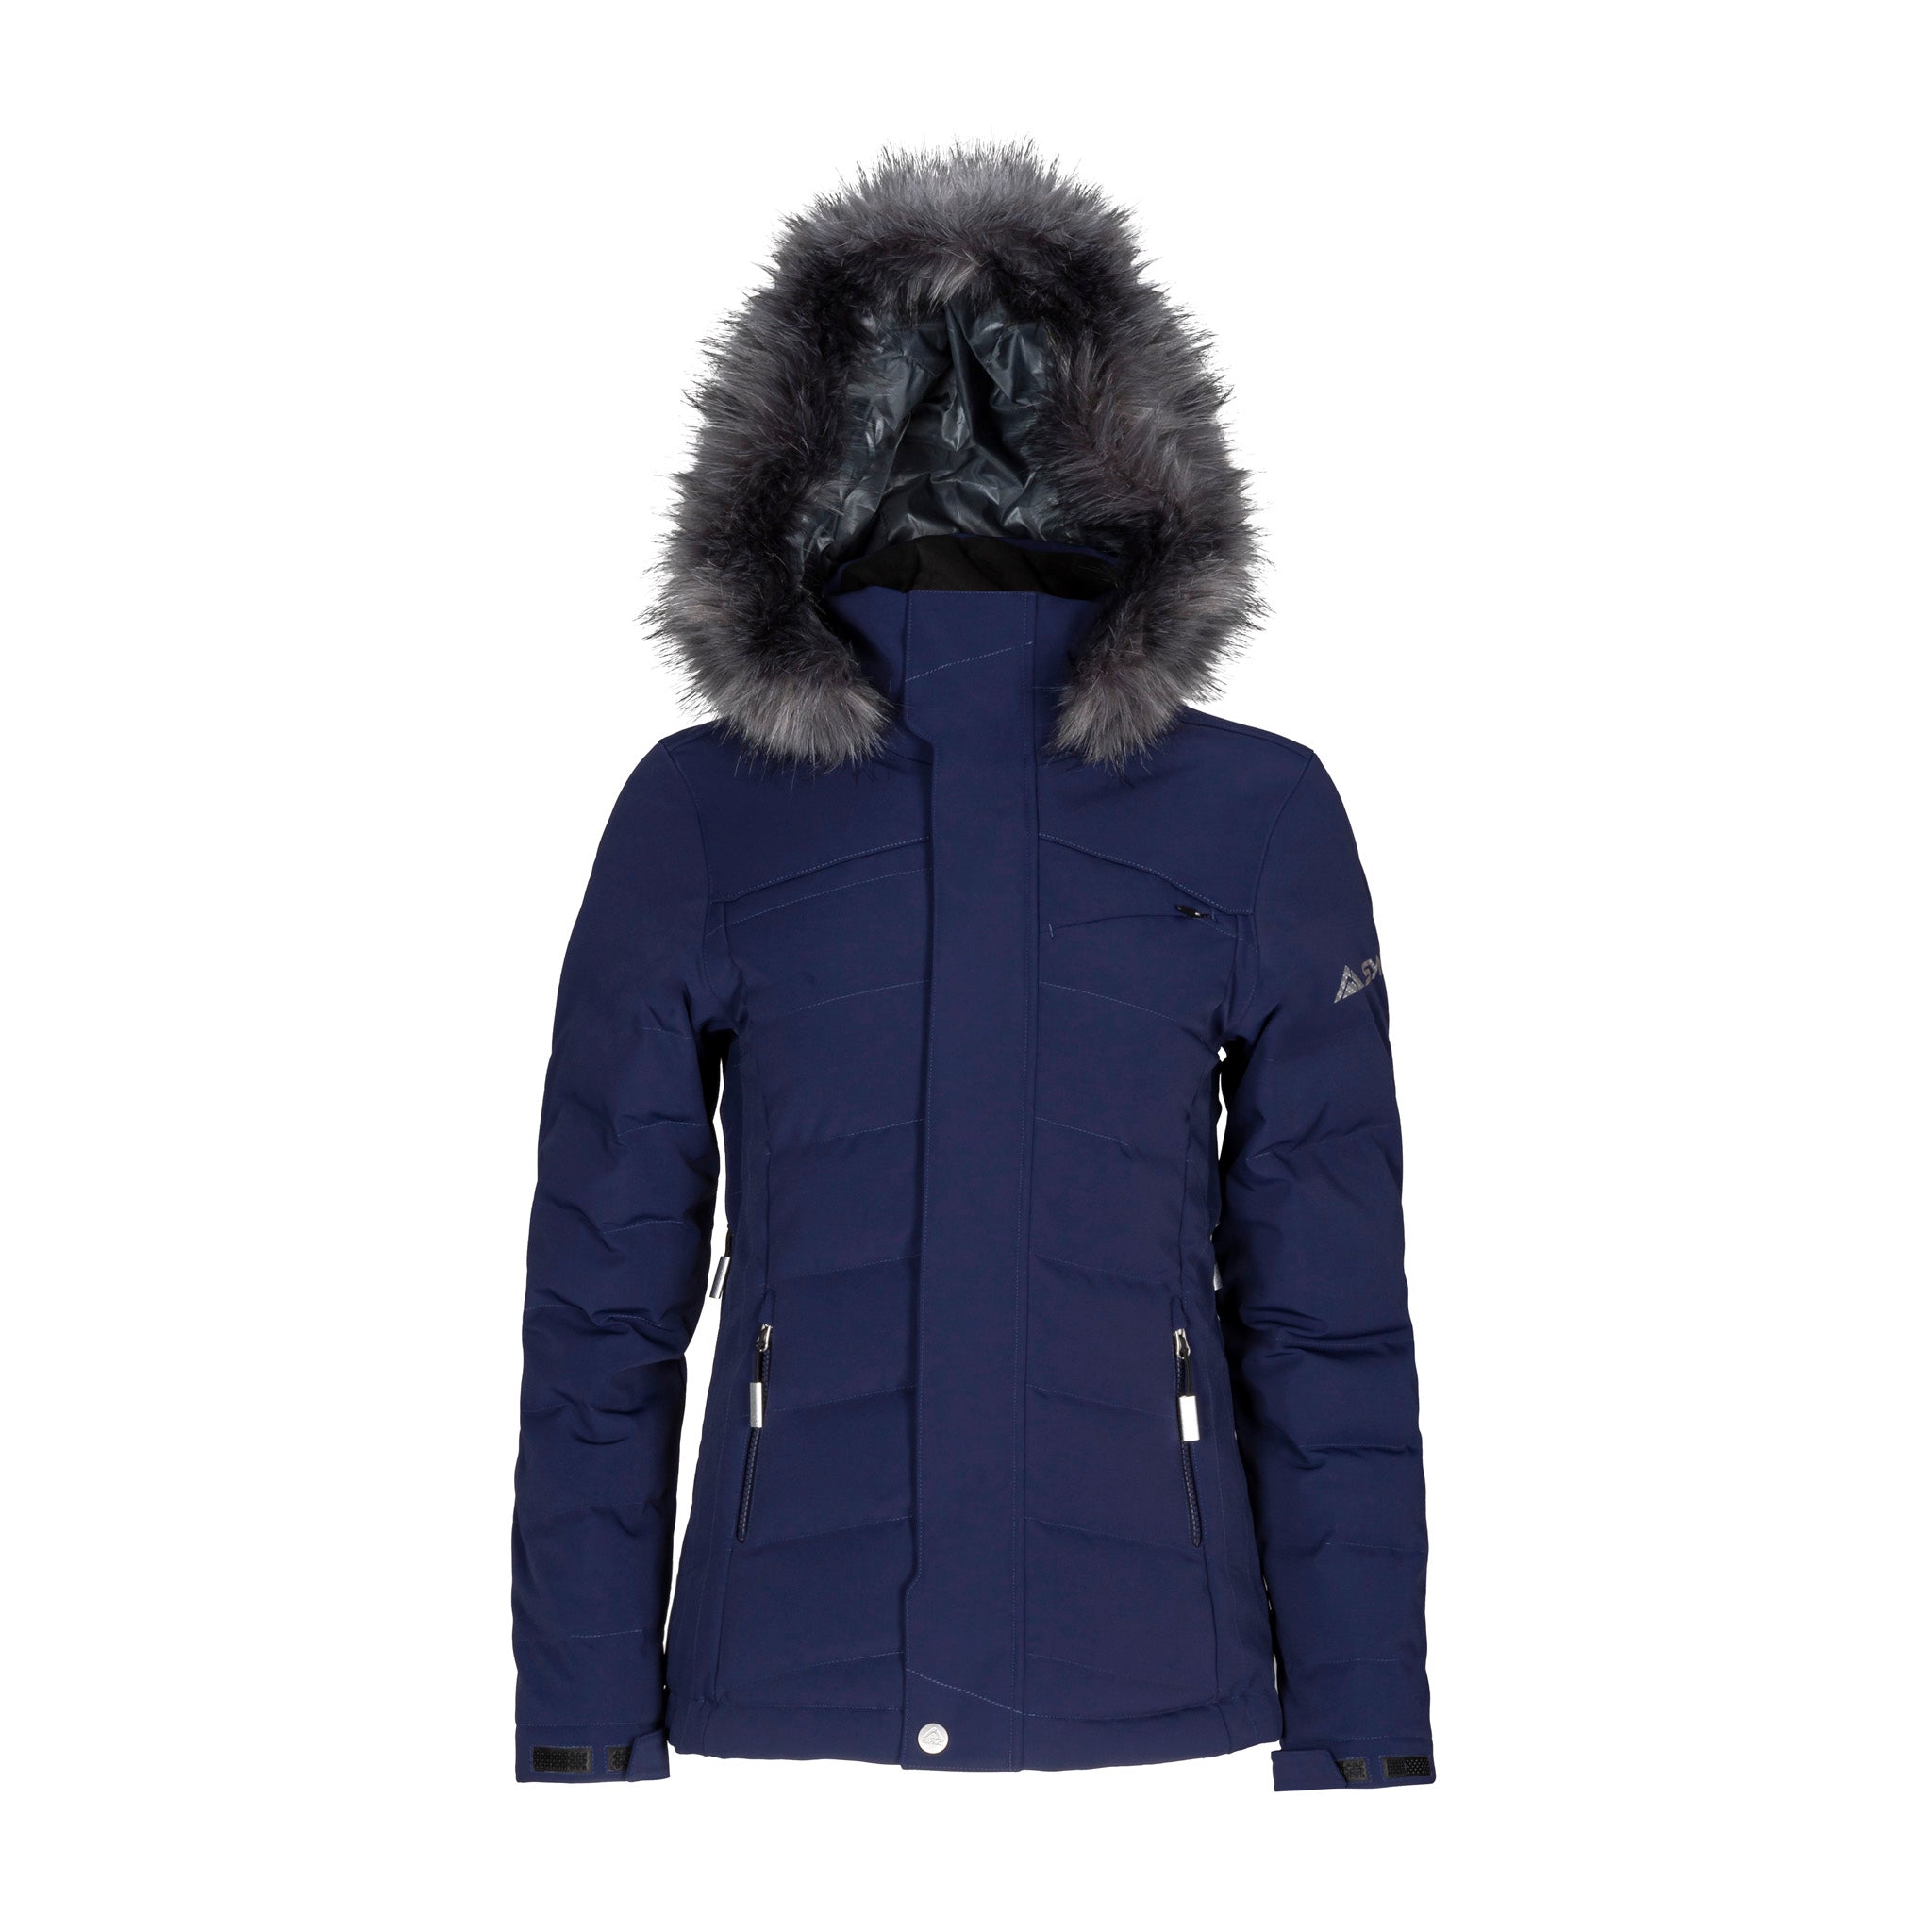 Mission Waterproof Jacket - navyblue, Women's Jackets + Coats